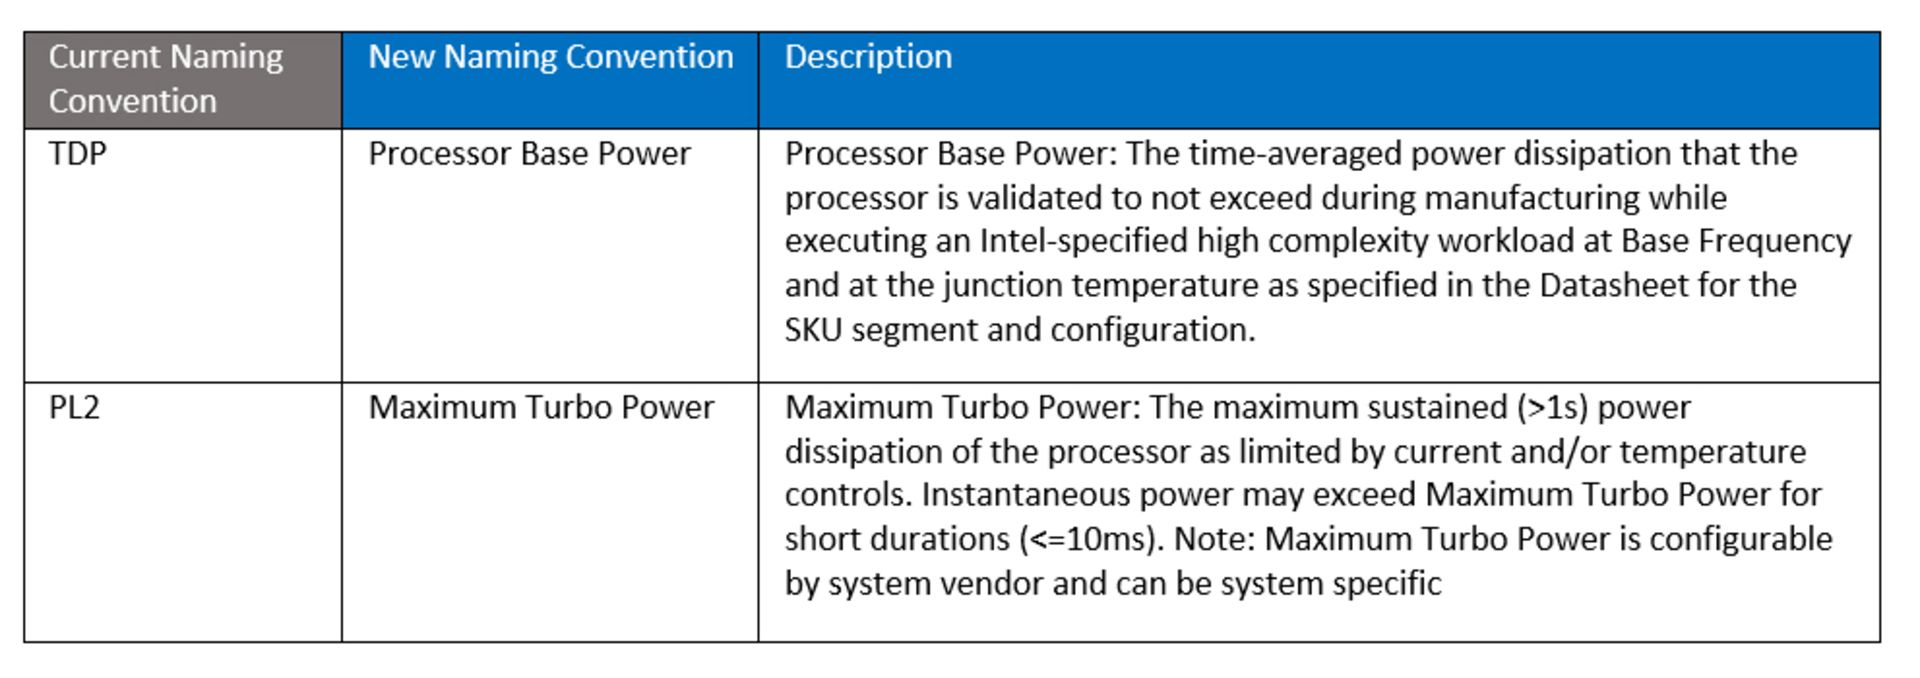 tdp-processor-base-power-pbp-maximum-turbo-power-mtp